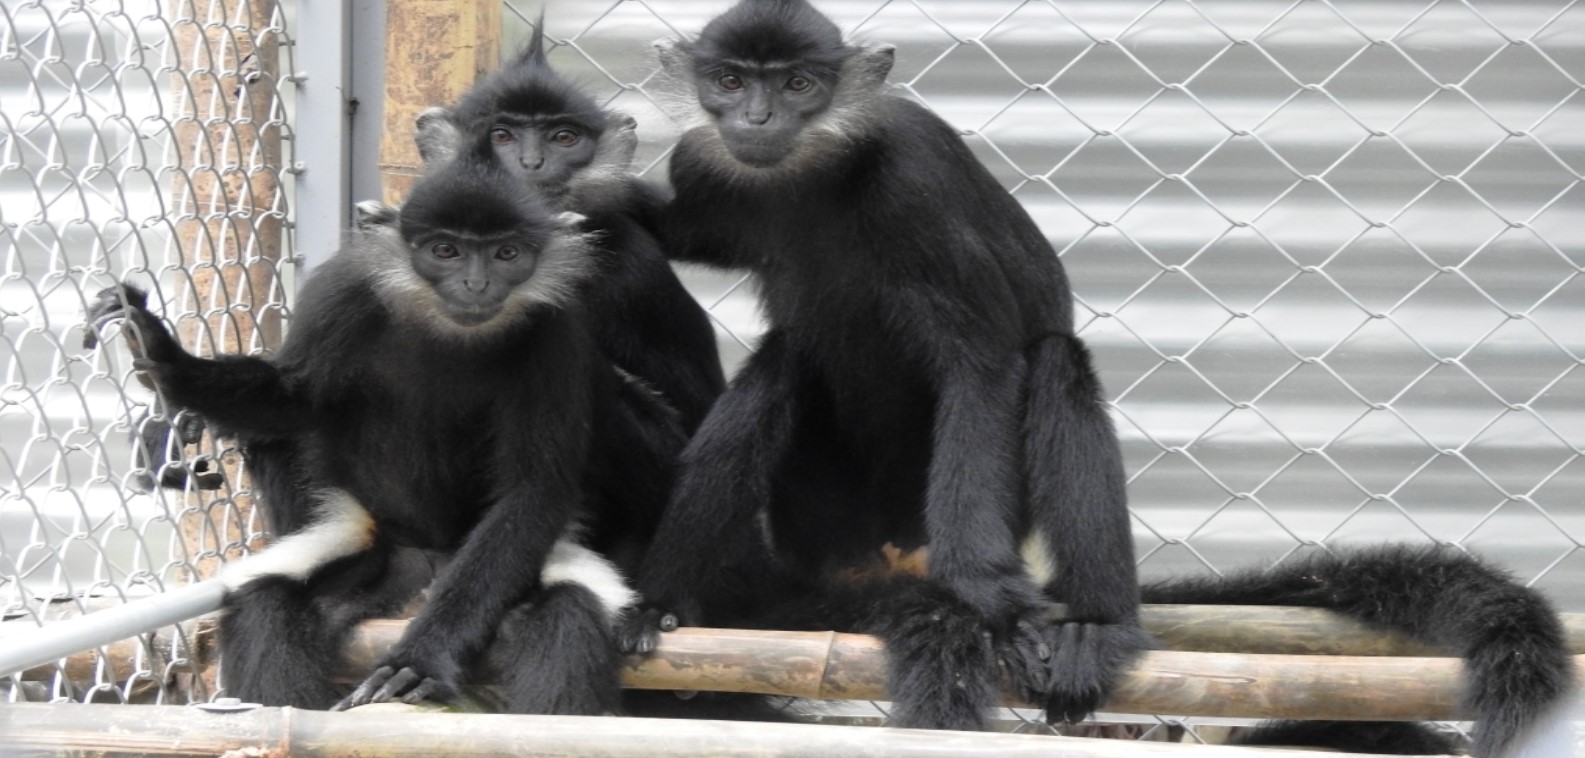 Three black and white Delacour’s langurs monkeys in compound in Vietnam